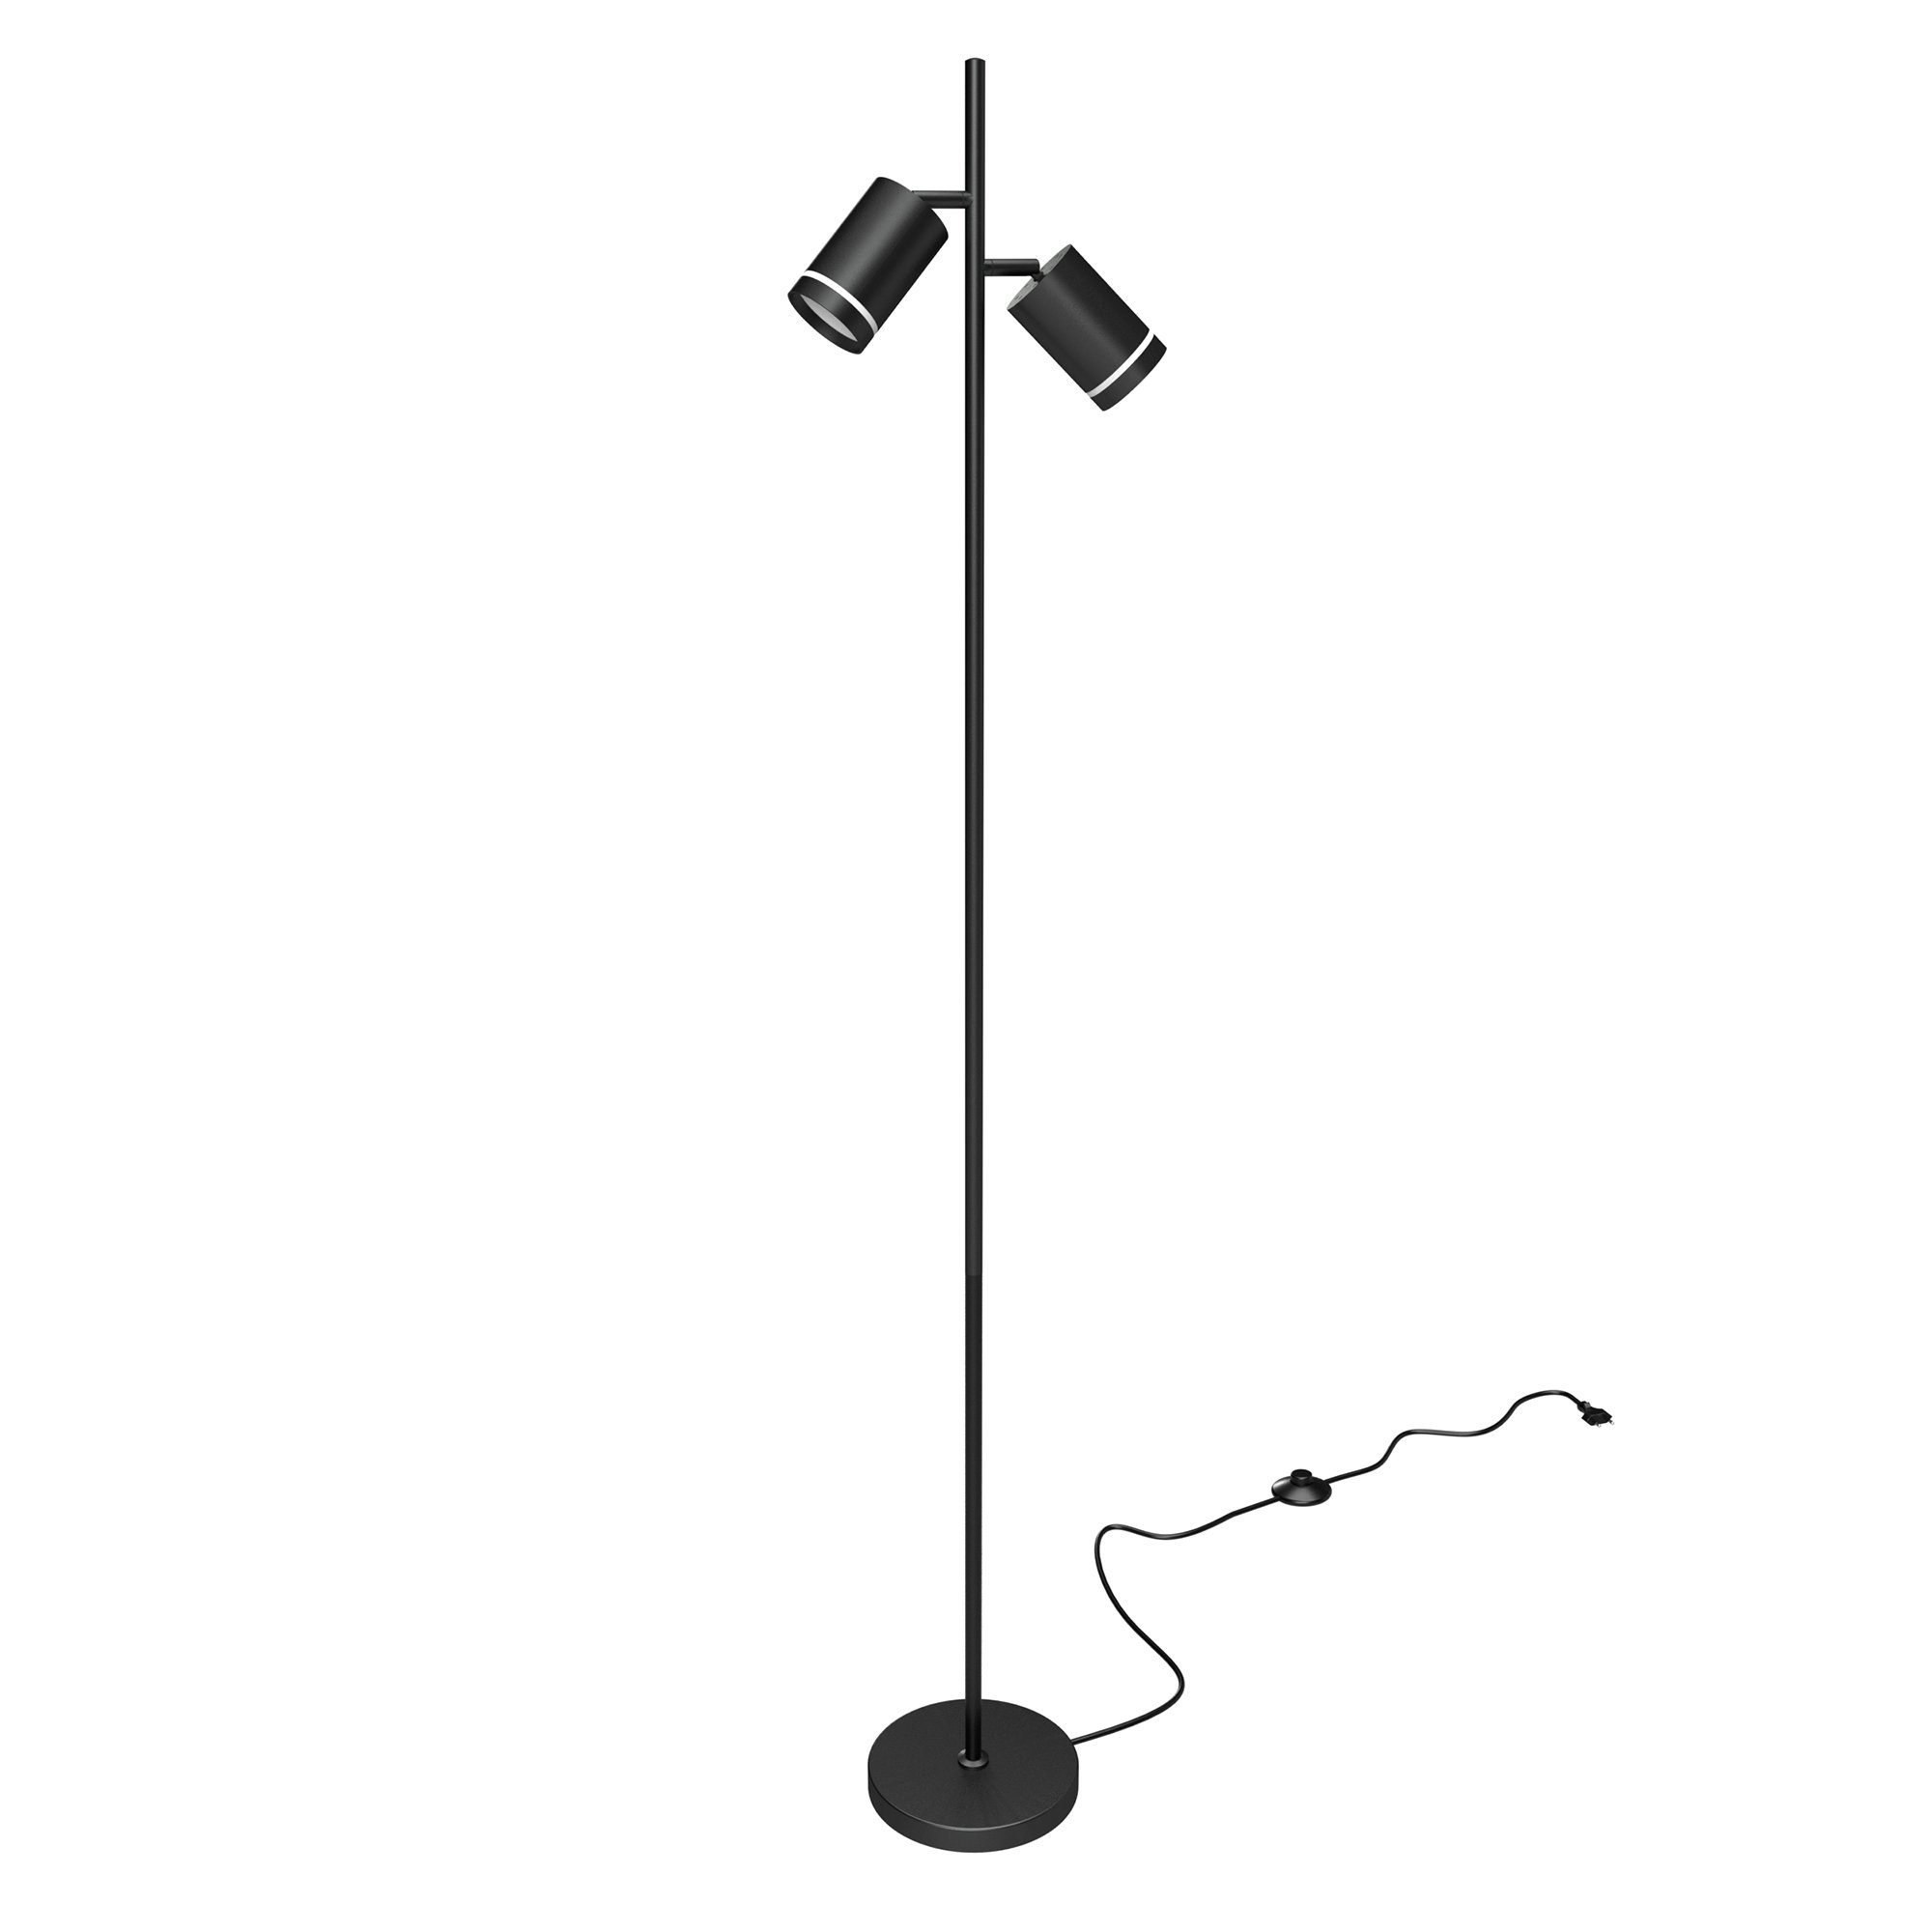 linovum LED Aufbaustrahler TAVIRA Stehlampe 2x GU10 6W, 2-flammig mit schwarz inklusive, LEDs Leuchtmittel inklusive warmweiß Leuchtmittel